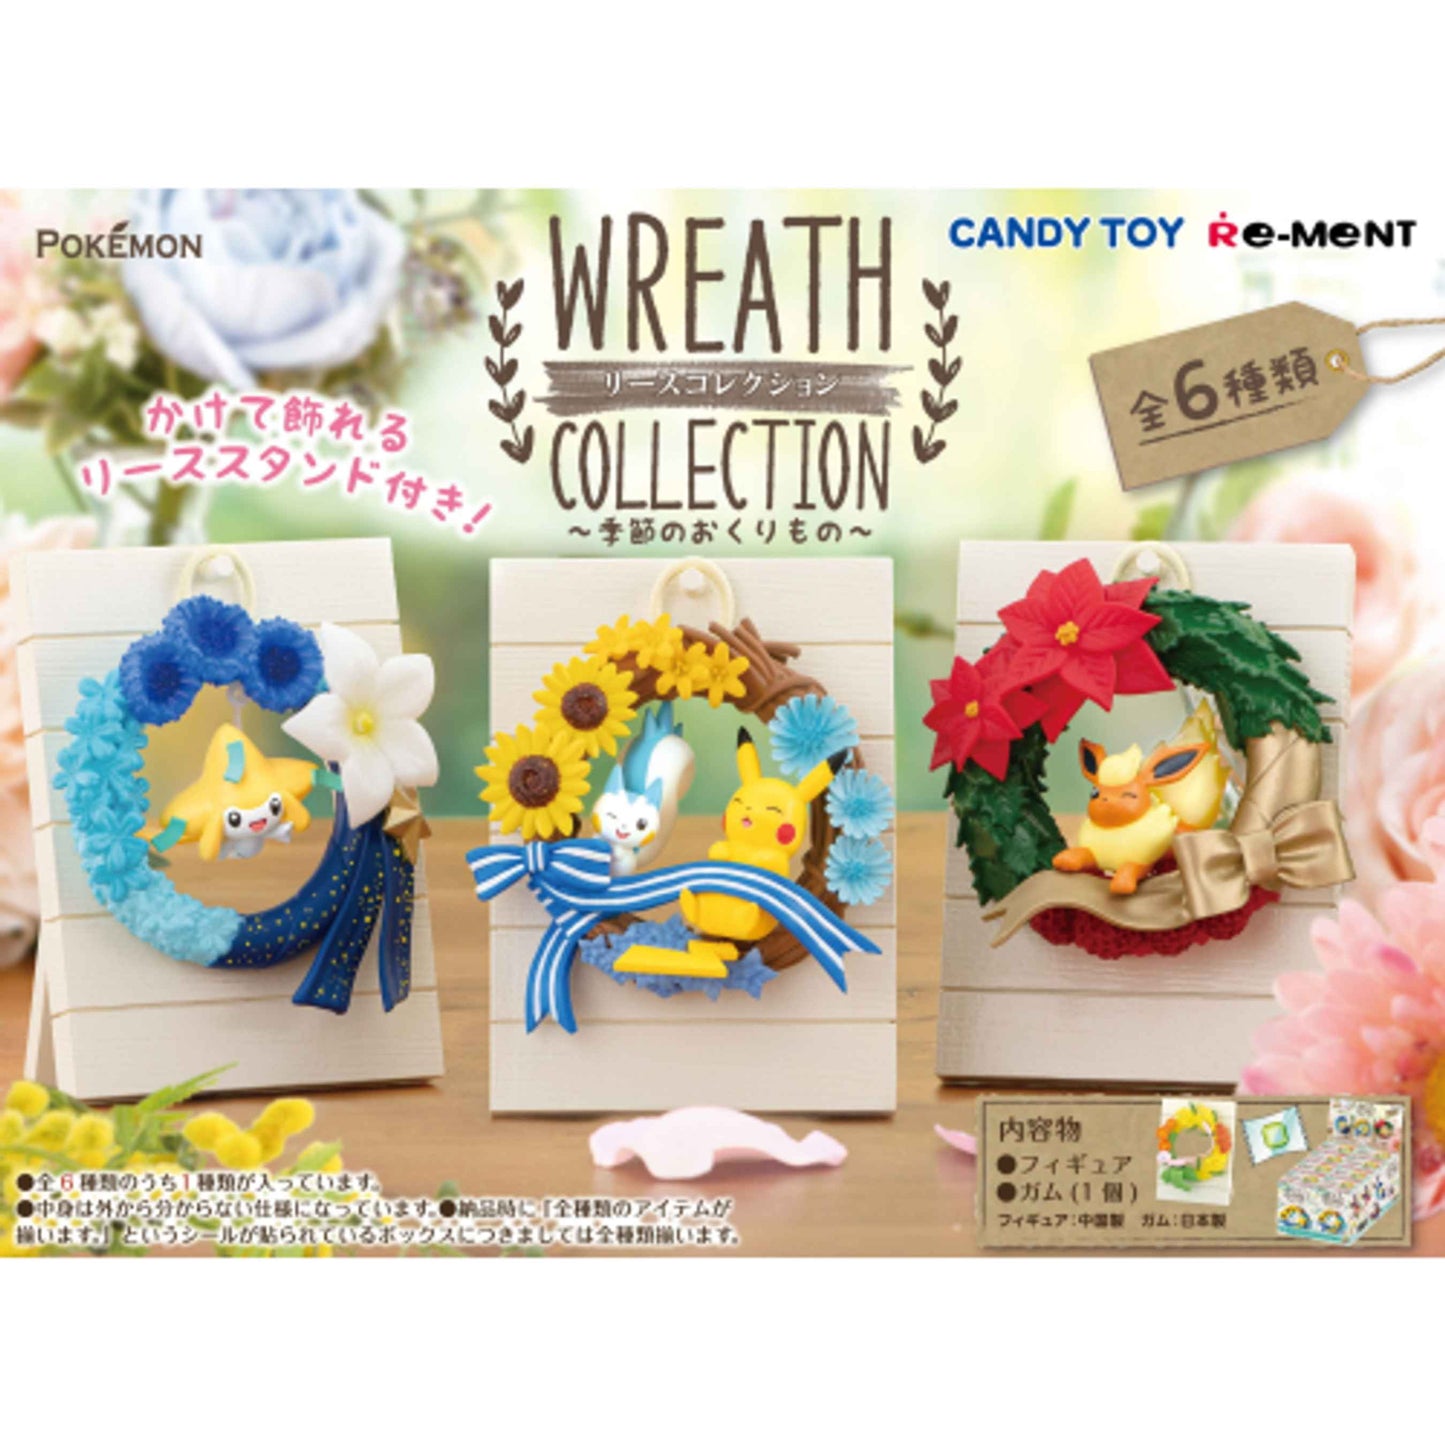 re-ment: Pokémon Wreath Collection Series Blind Box - Whole Set of 6